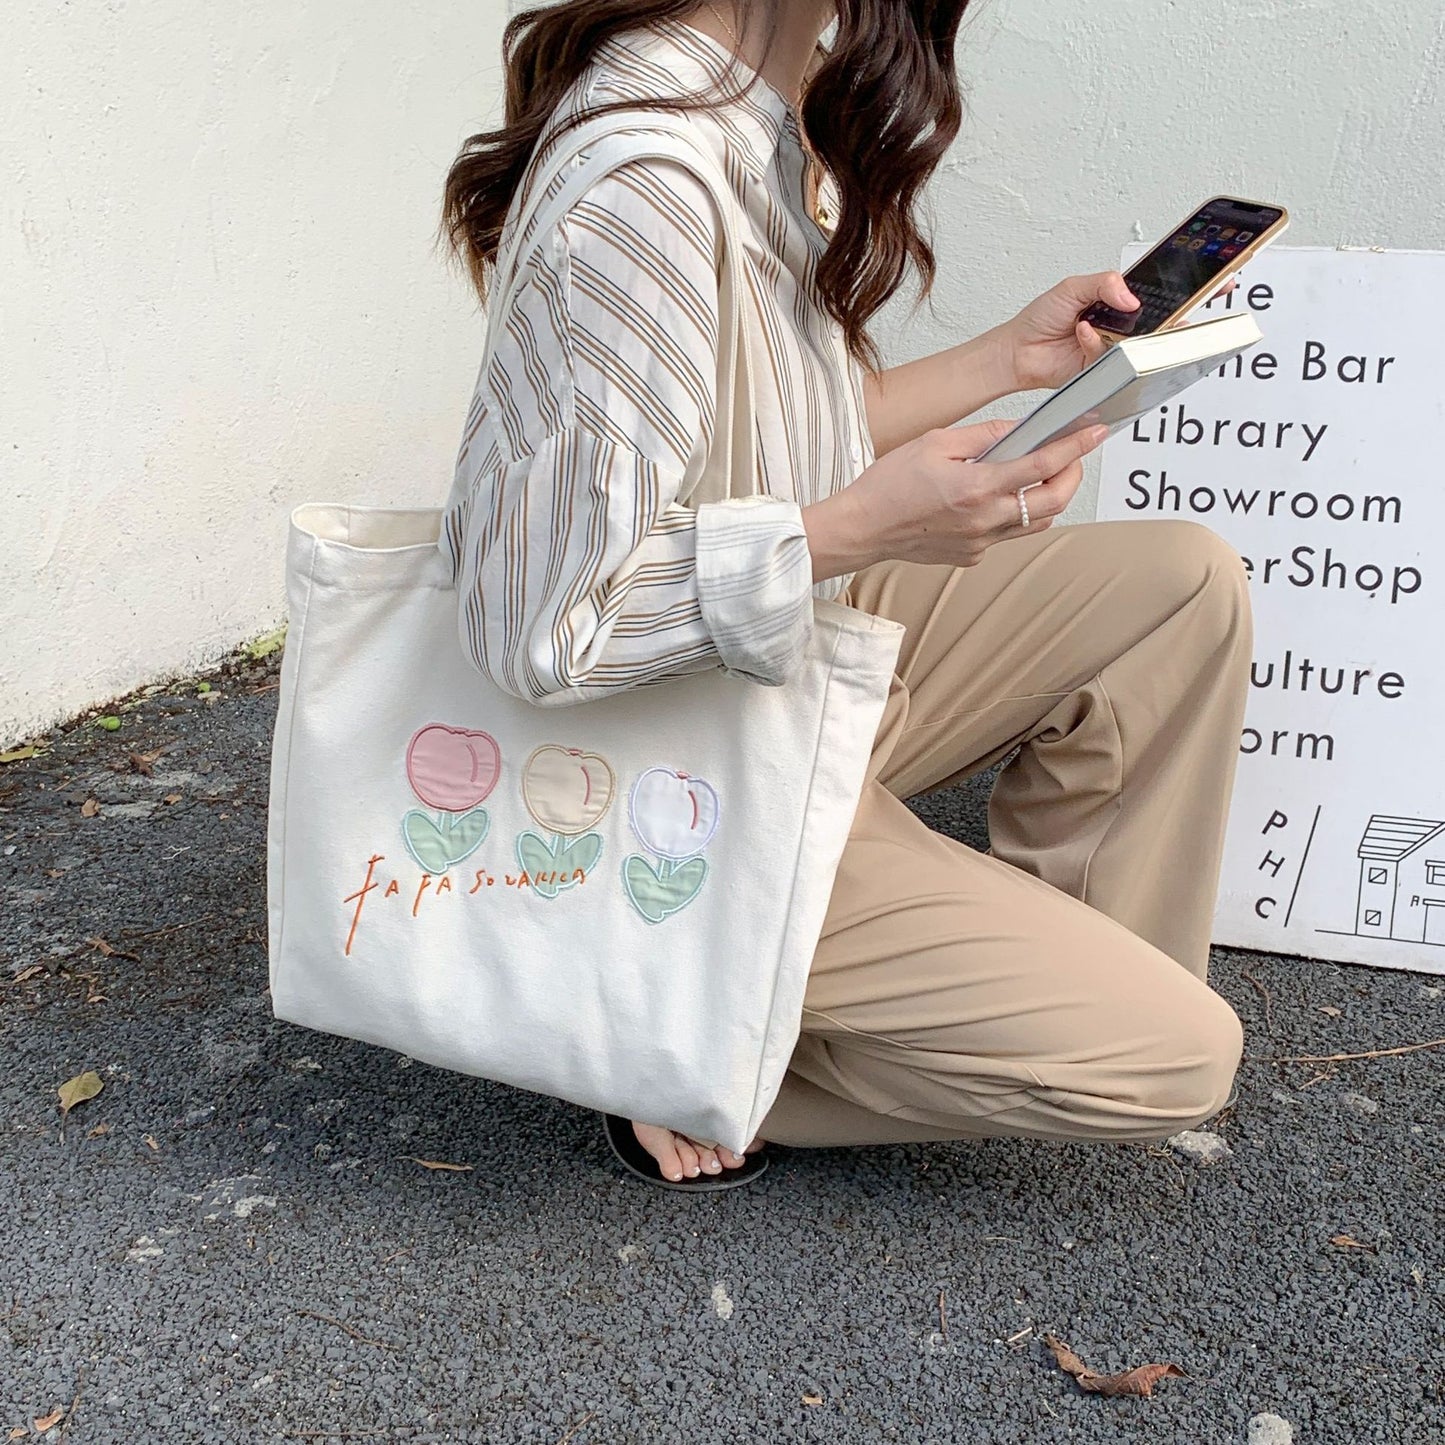 Embroidered Tulip Tote Bag Canvas Bag Shopping Bag Casual Shoulder Bag 067-AA3-0008